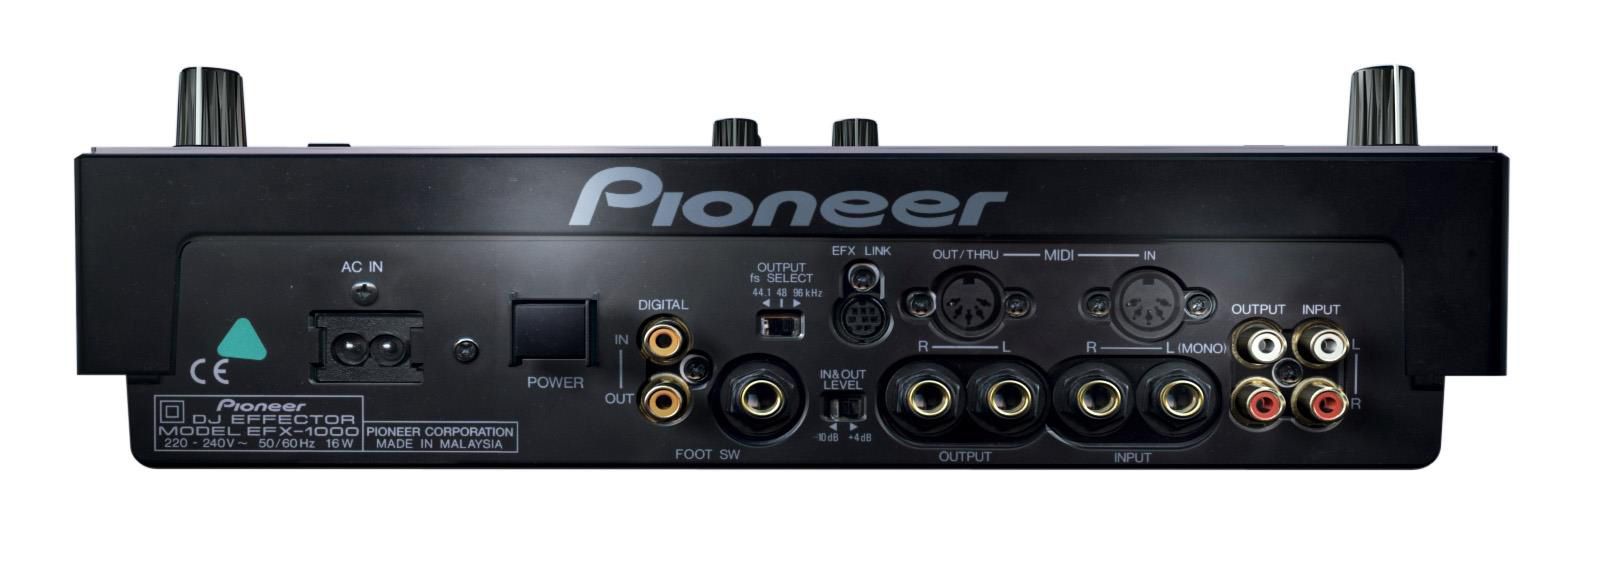 Pioneer EFX1000 - фото 3